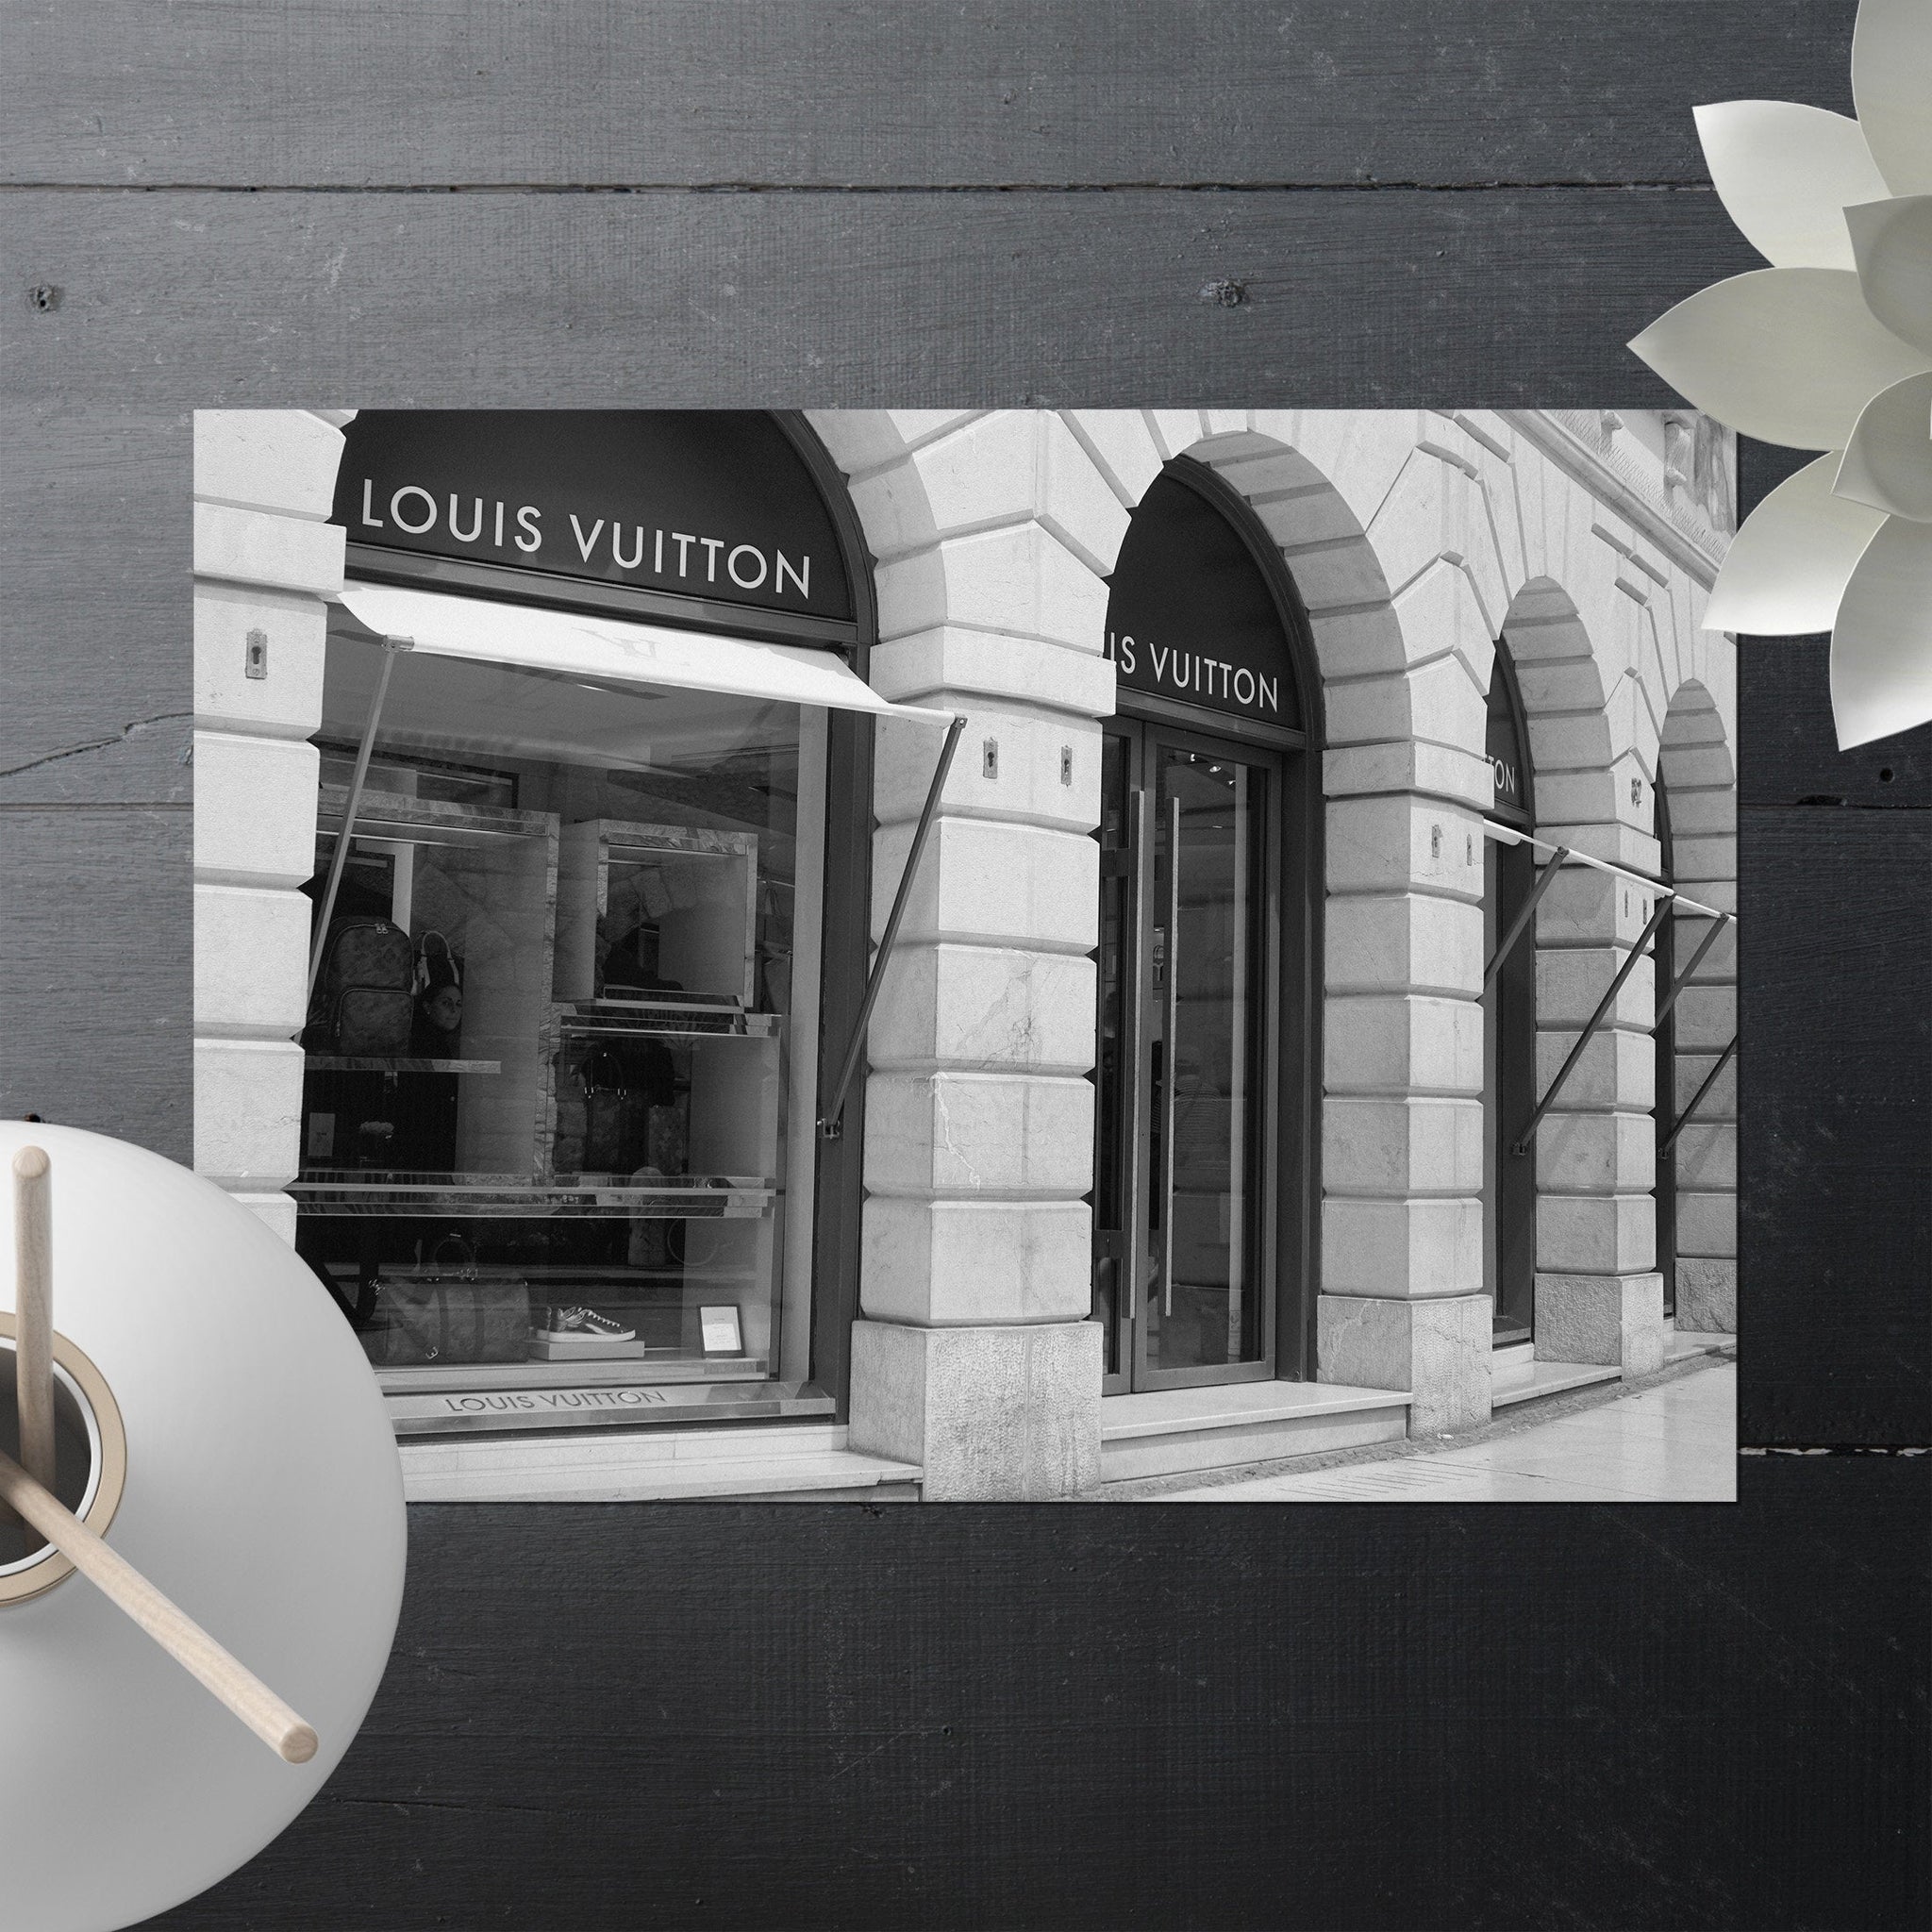 Black and white Louis Vuitton Shop Front Print A4/A3 Print.